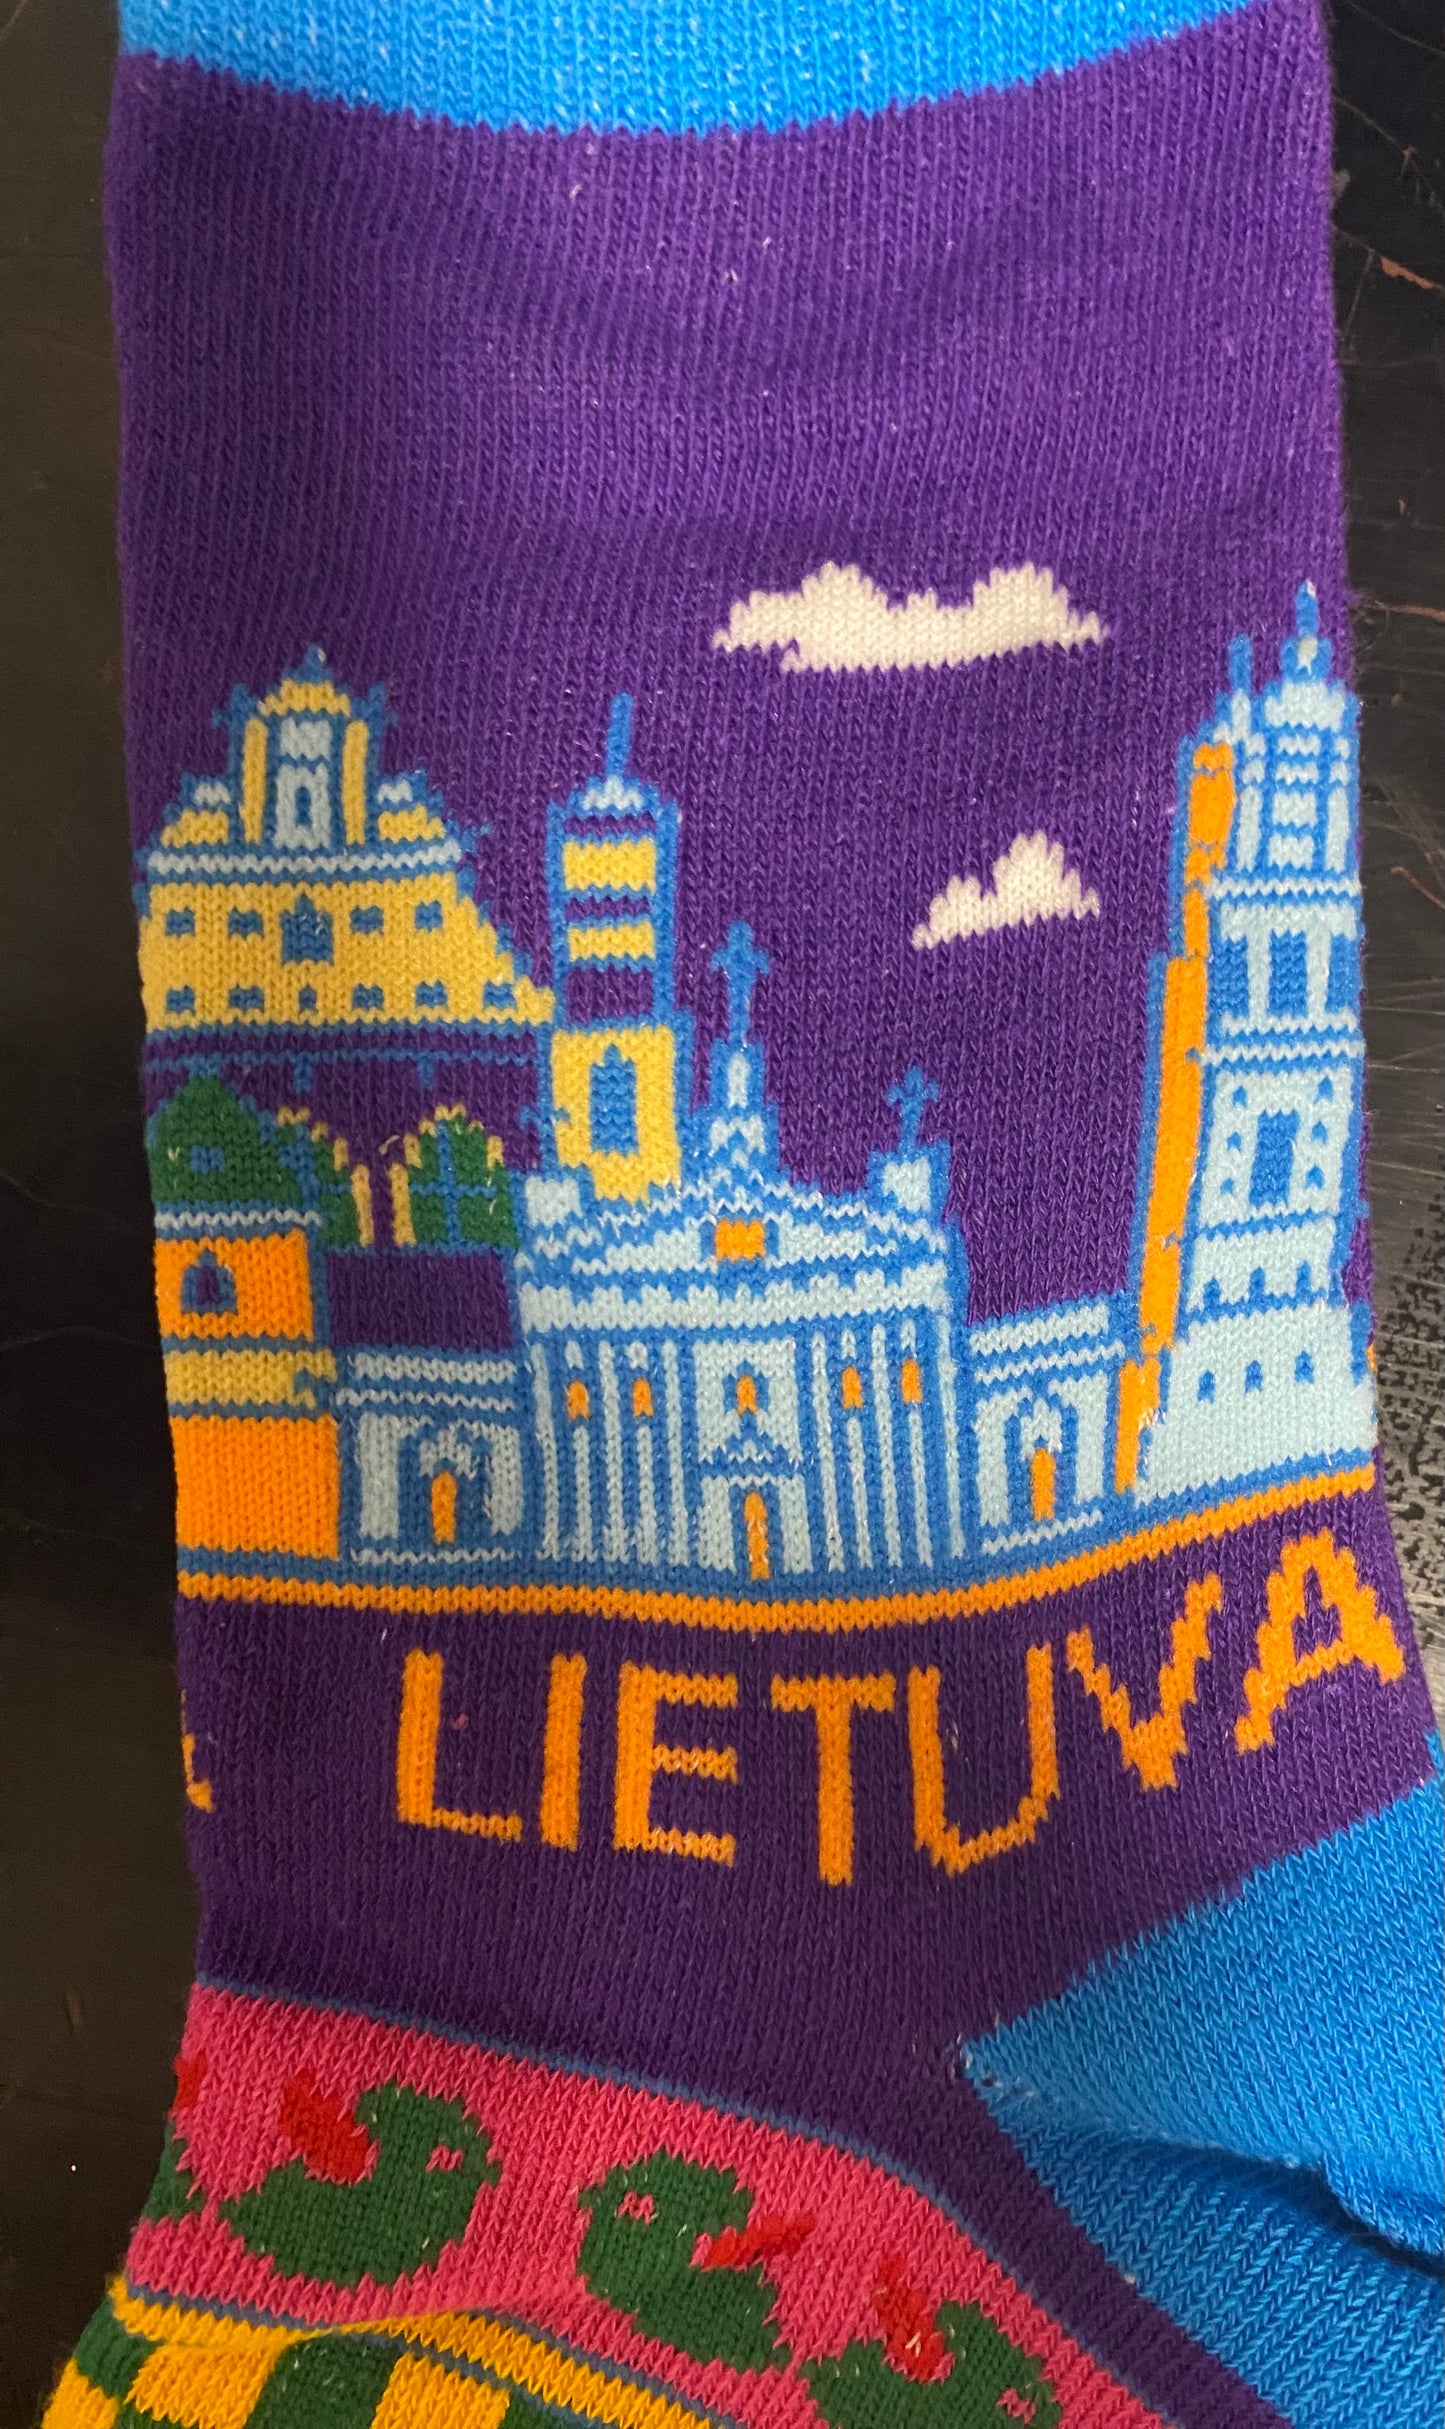 Women's Lithuania Socks